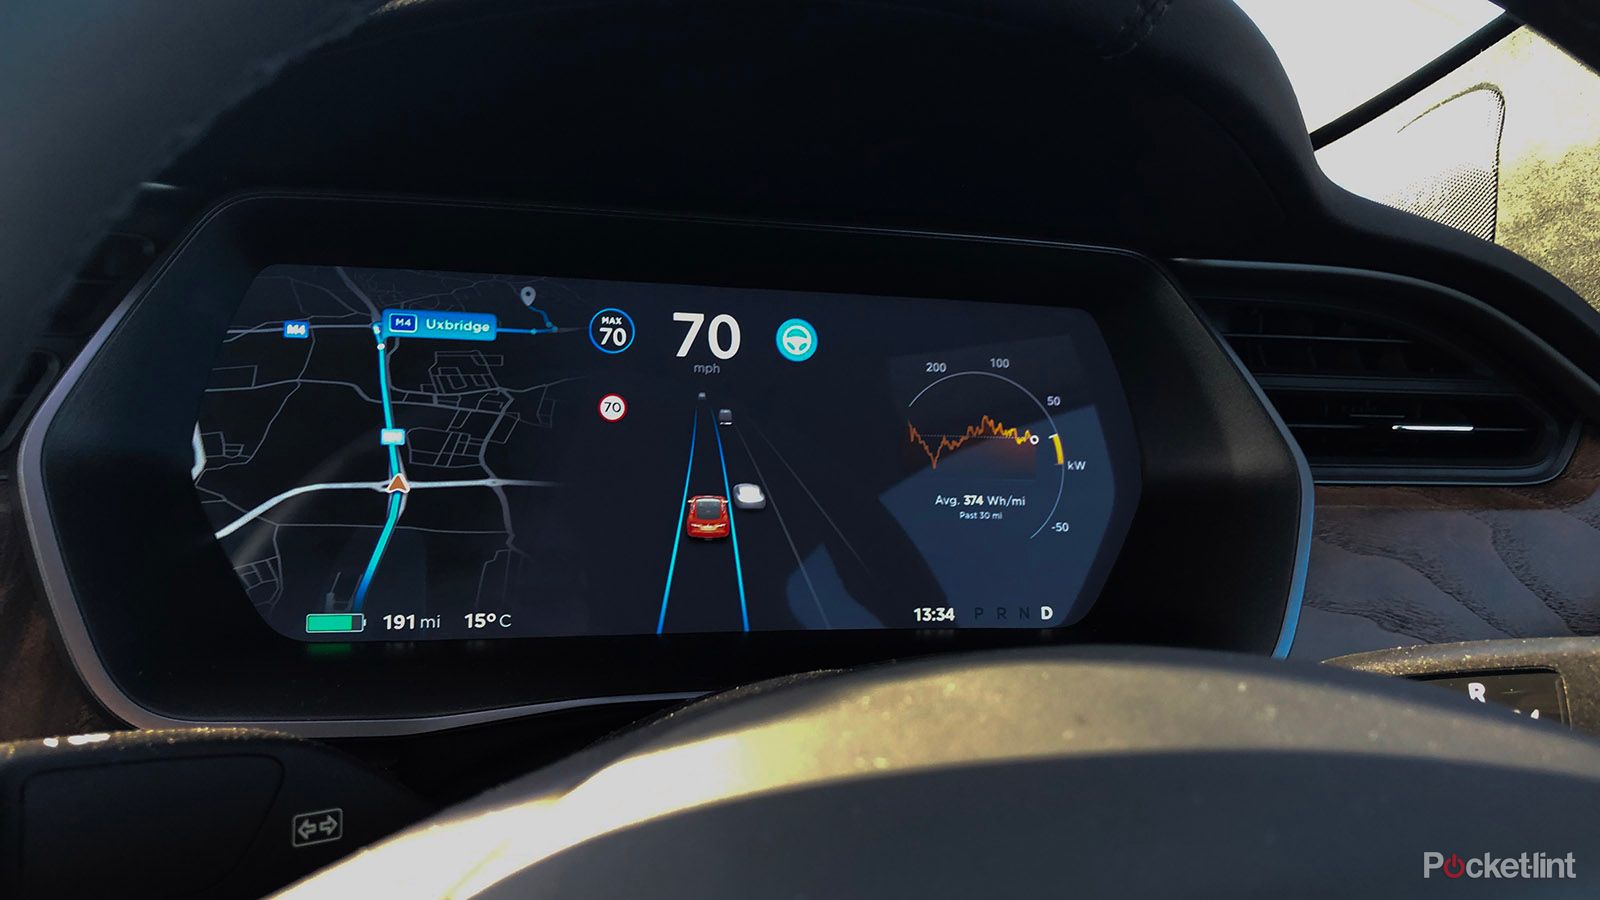 A Tesla dashboard display the car's autopilot software